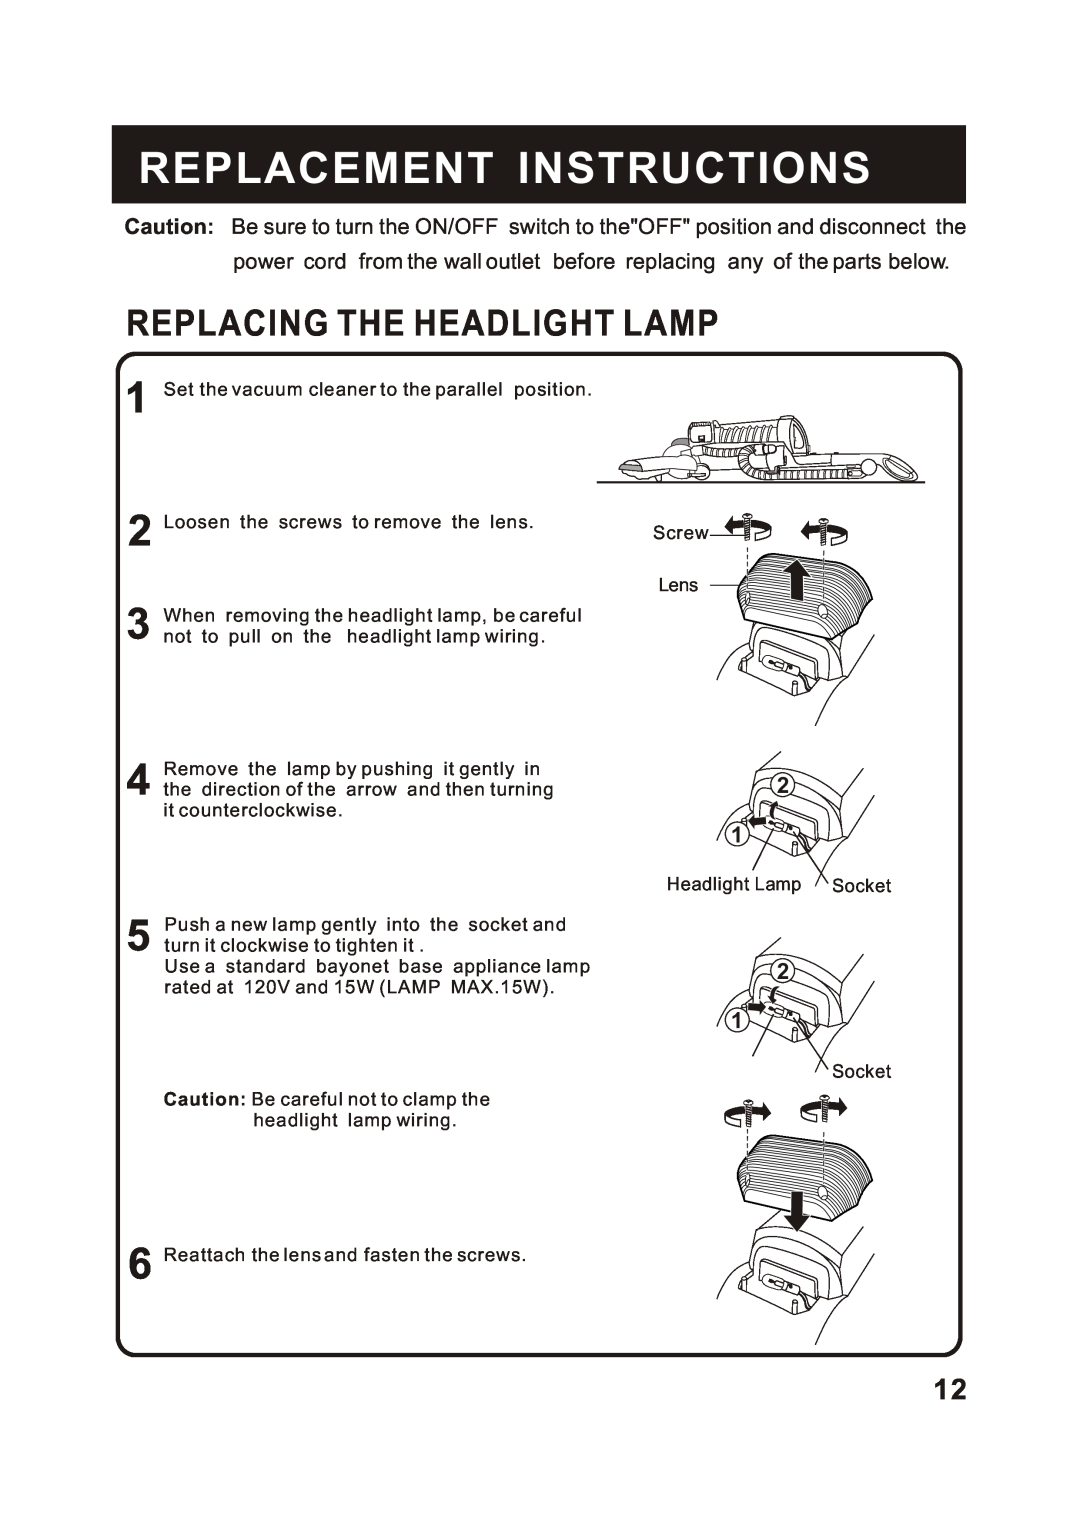 Fantom Vacuum FM741B instruction manual Replacement Instructions, Replacing The Headlight Lamp 